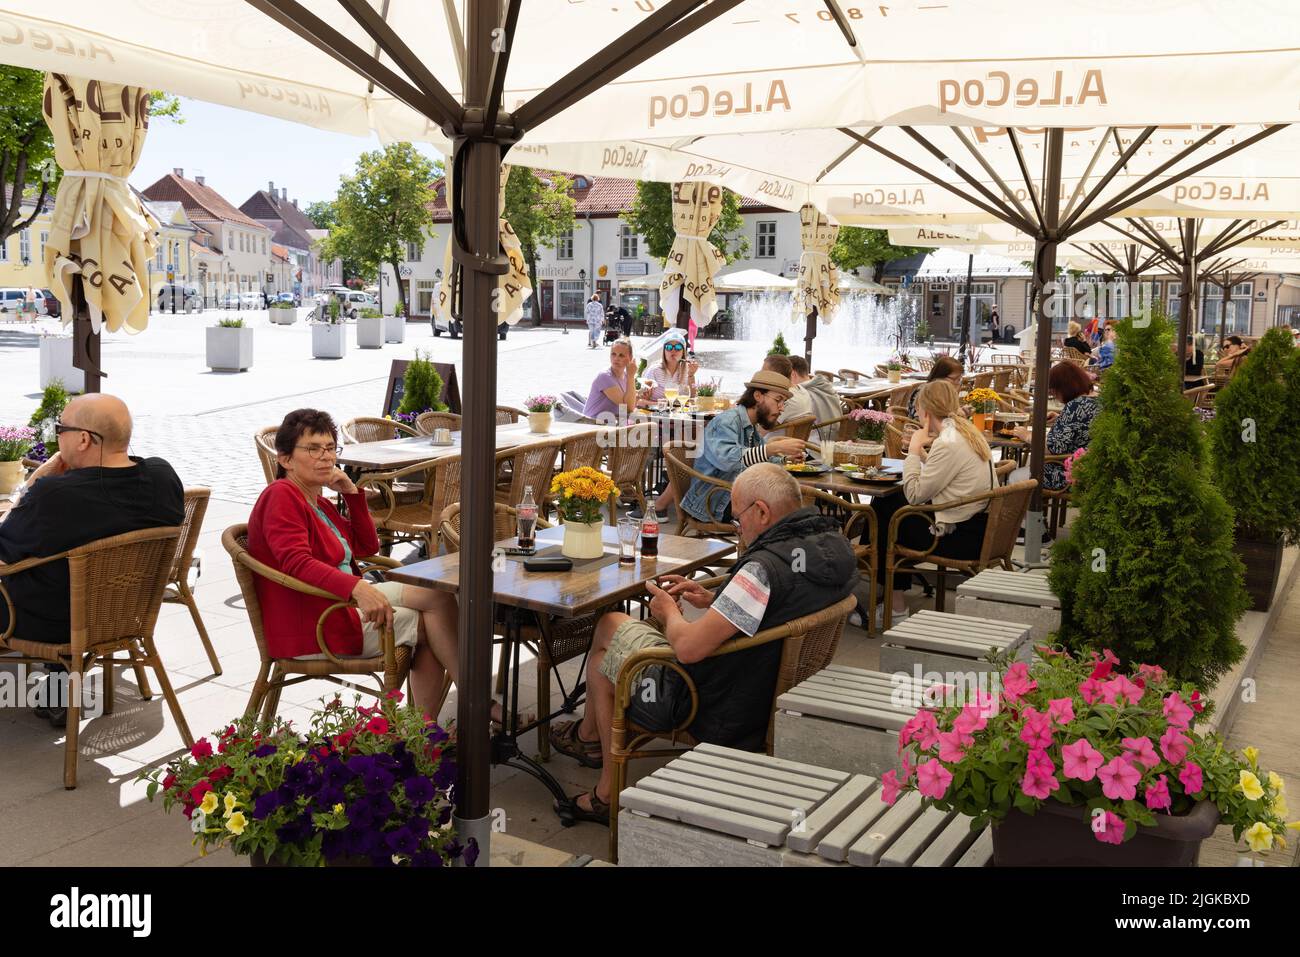 Estonia cafe; persone sedute a bere fuori in estate in un cafe nella città di Kuressaare, Saaremaa Estonia Europe Foto Stock